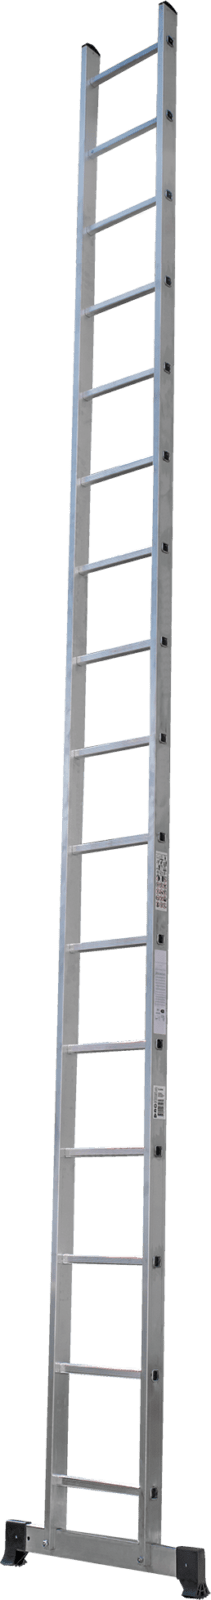 Лестница алюминиевая приставная NV1210 артикул 1210116